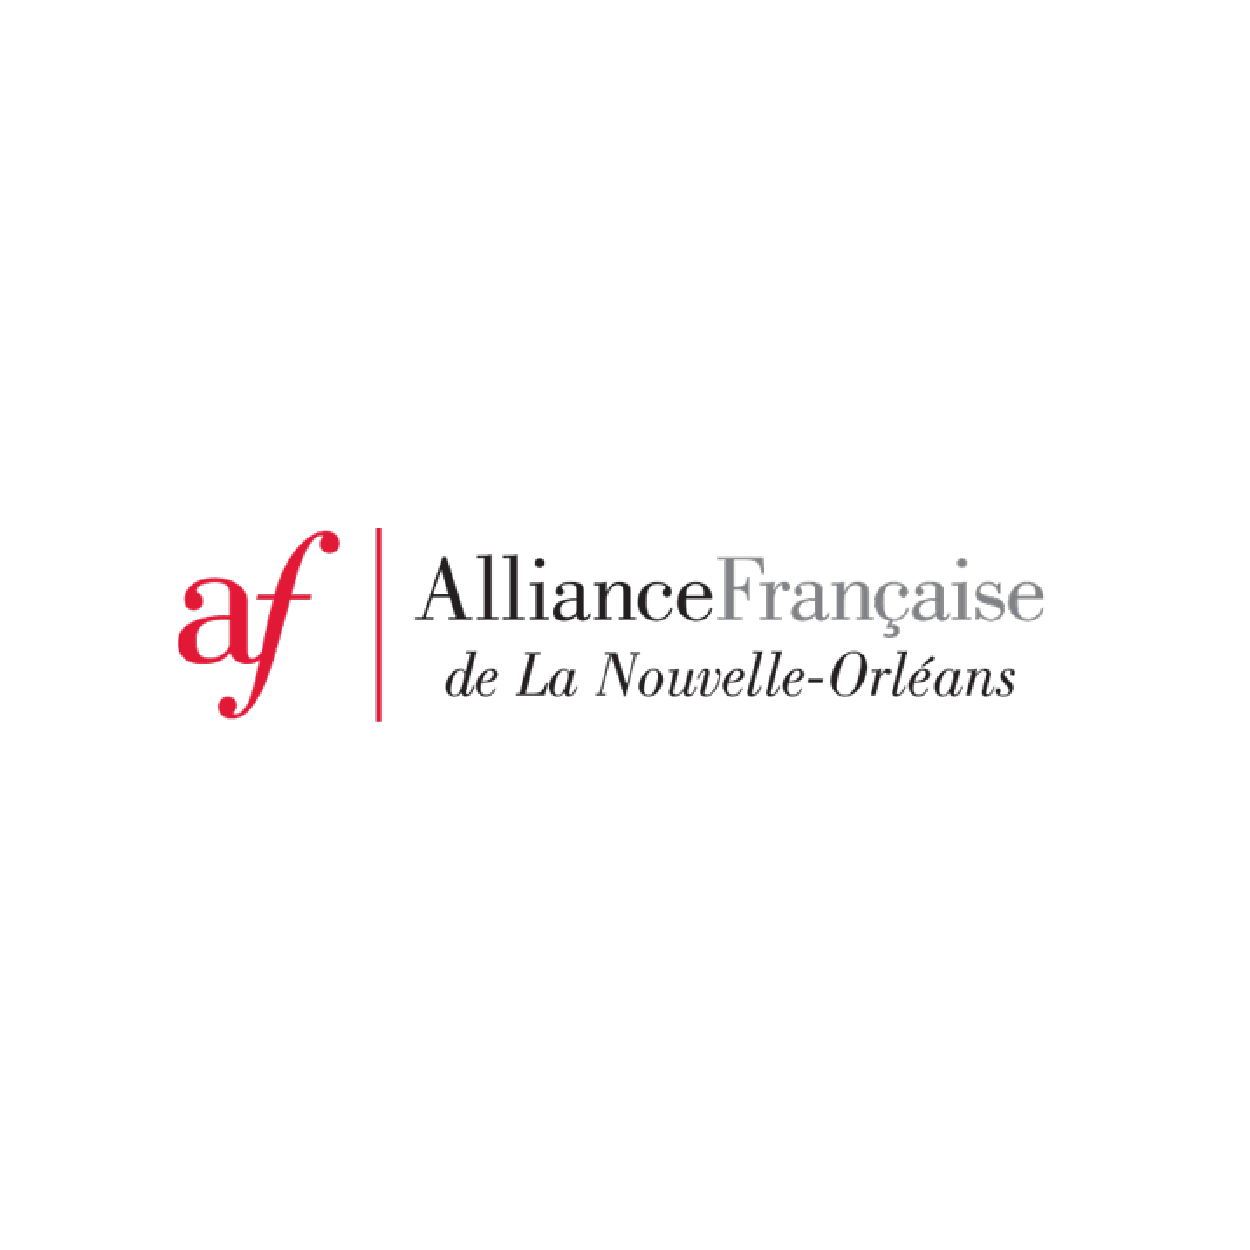 Alliance-francaise-01.png